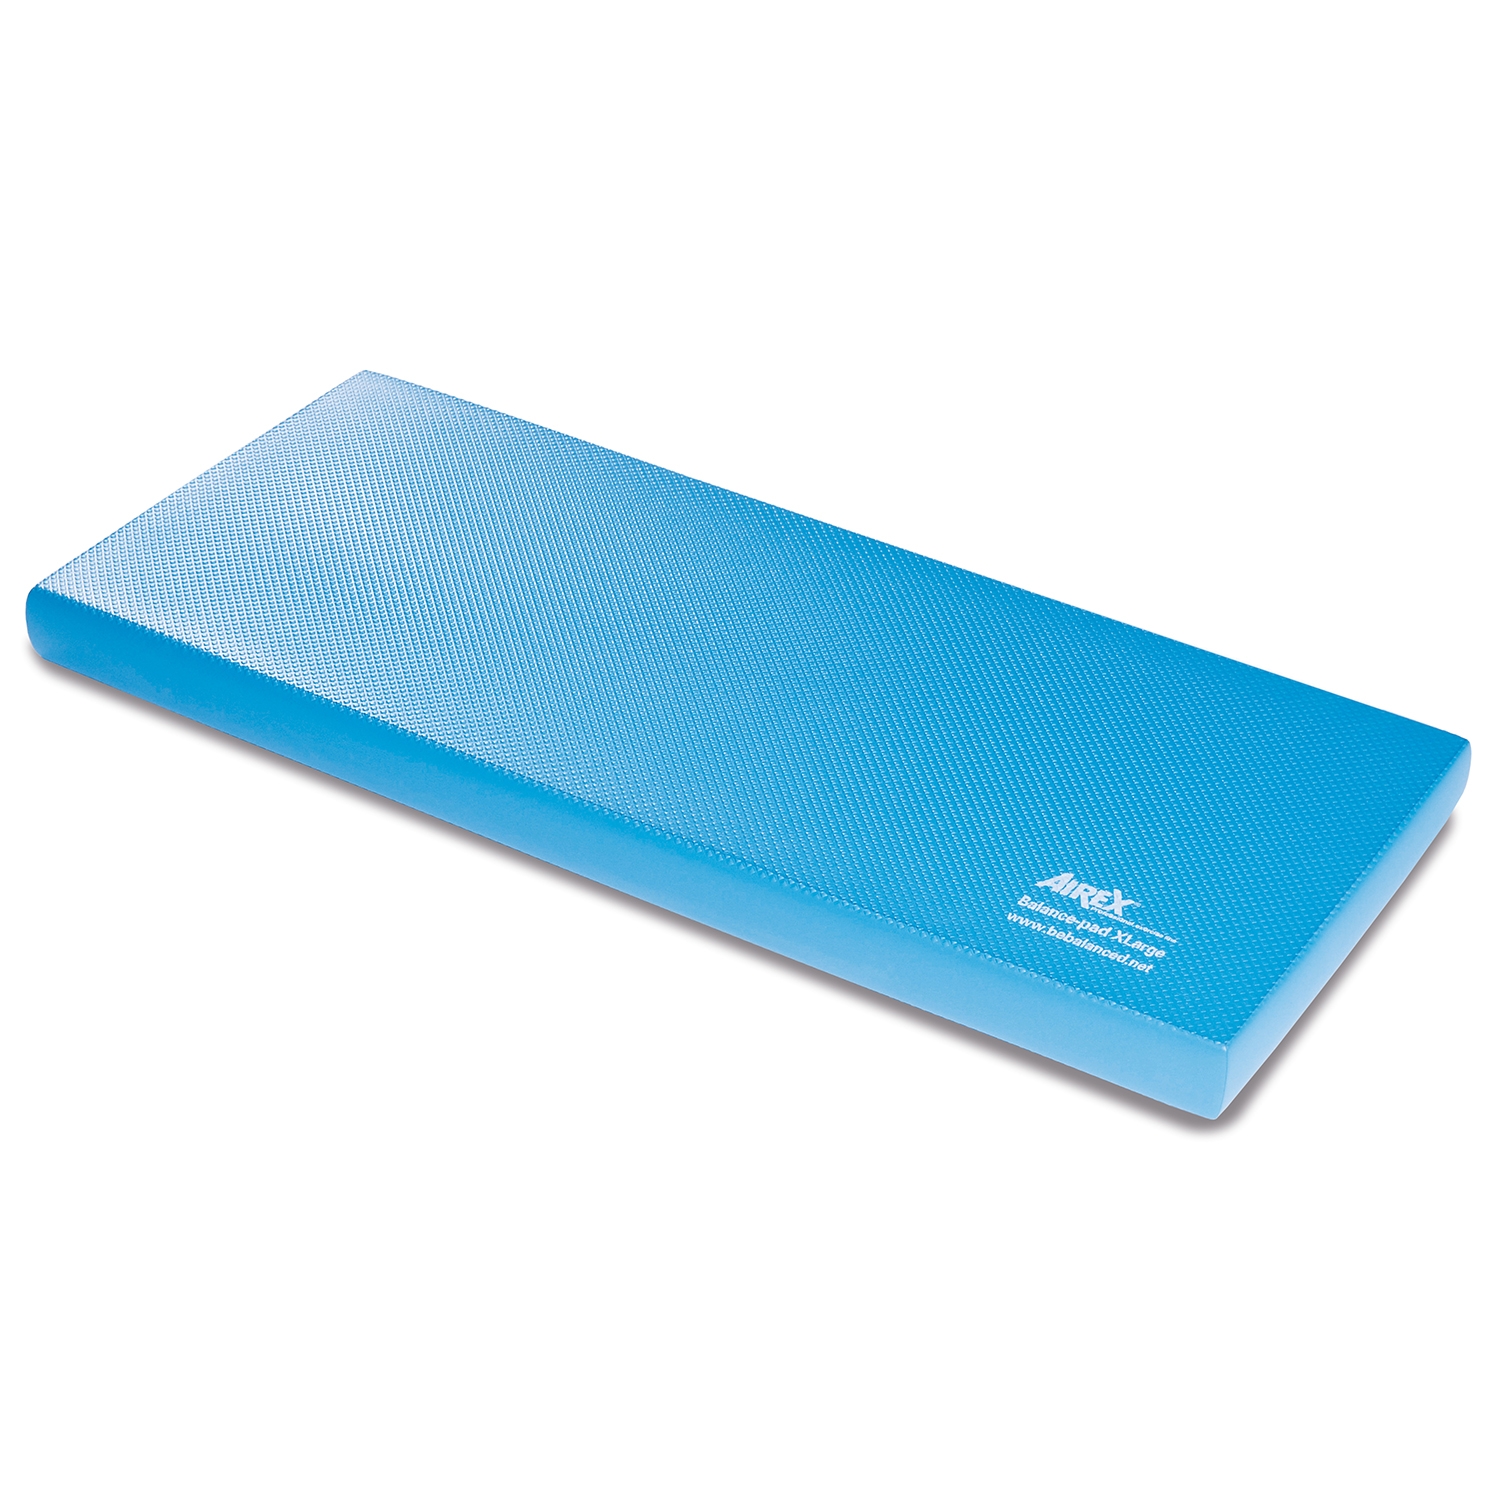 Airex Balance Pad XLarge - 98 x 41 x 6 cm - blauw